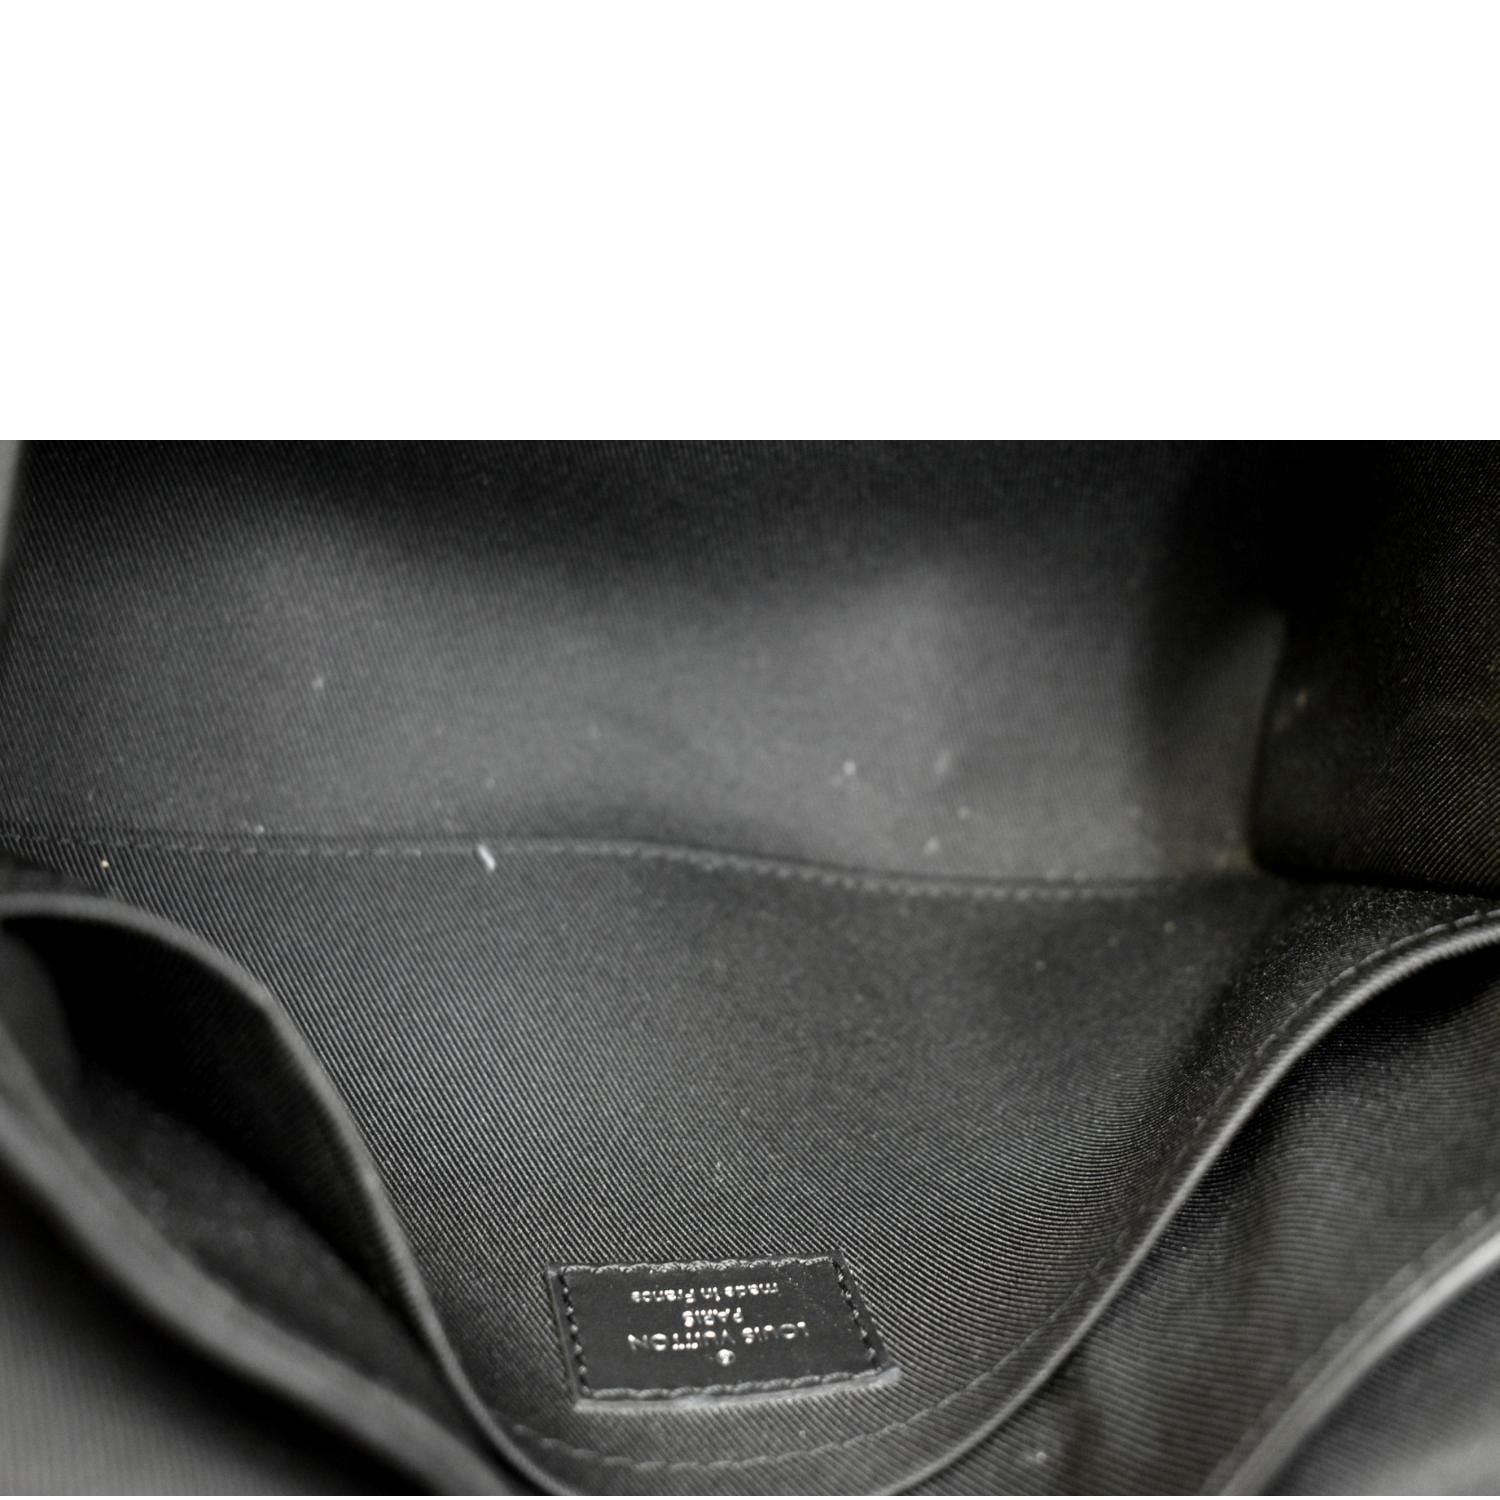 Louis Vuitton Trunk In Women's Bags & Handbags for sale